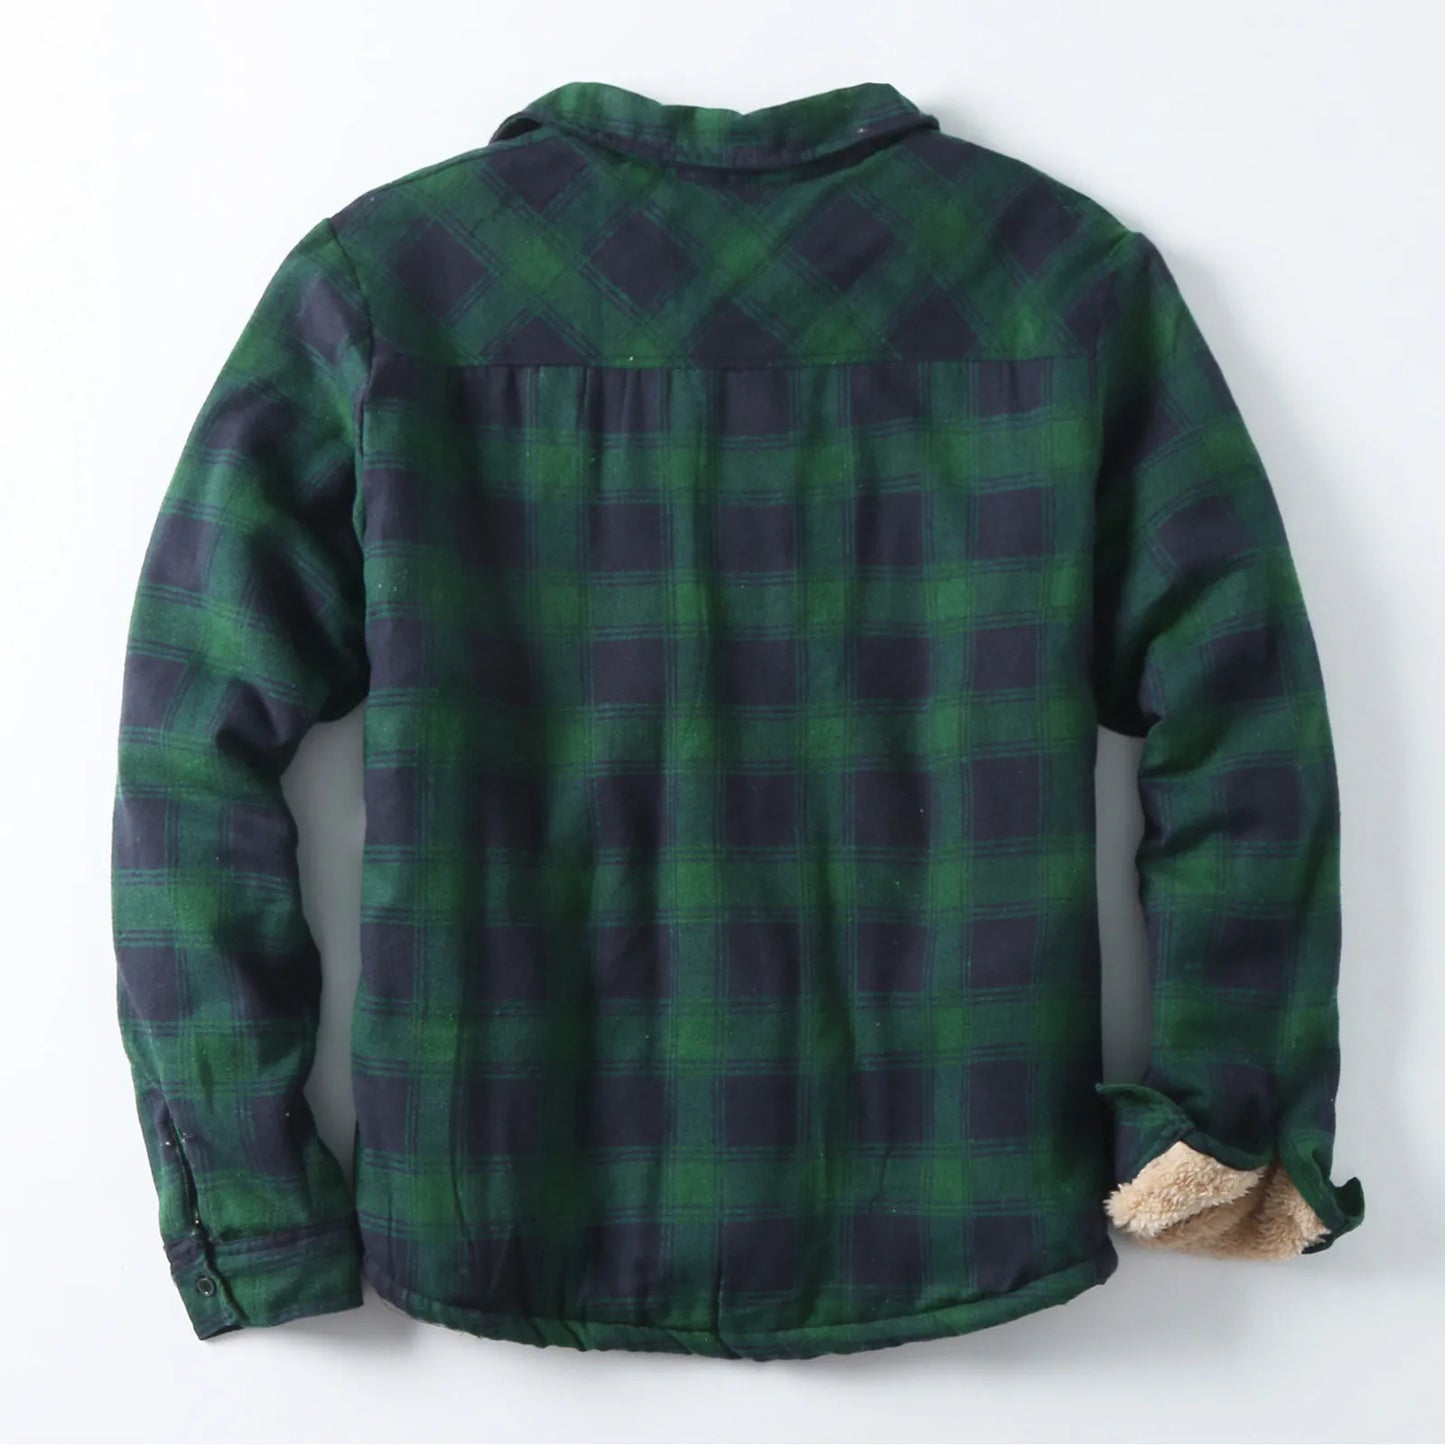 Men's New Winter Plaid Sweater Hooded Cardigan Cold Coat Wool Zipper Jacket Autumn Fleece Warm Clothes Checkered Knit Jumper